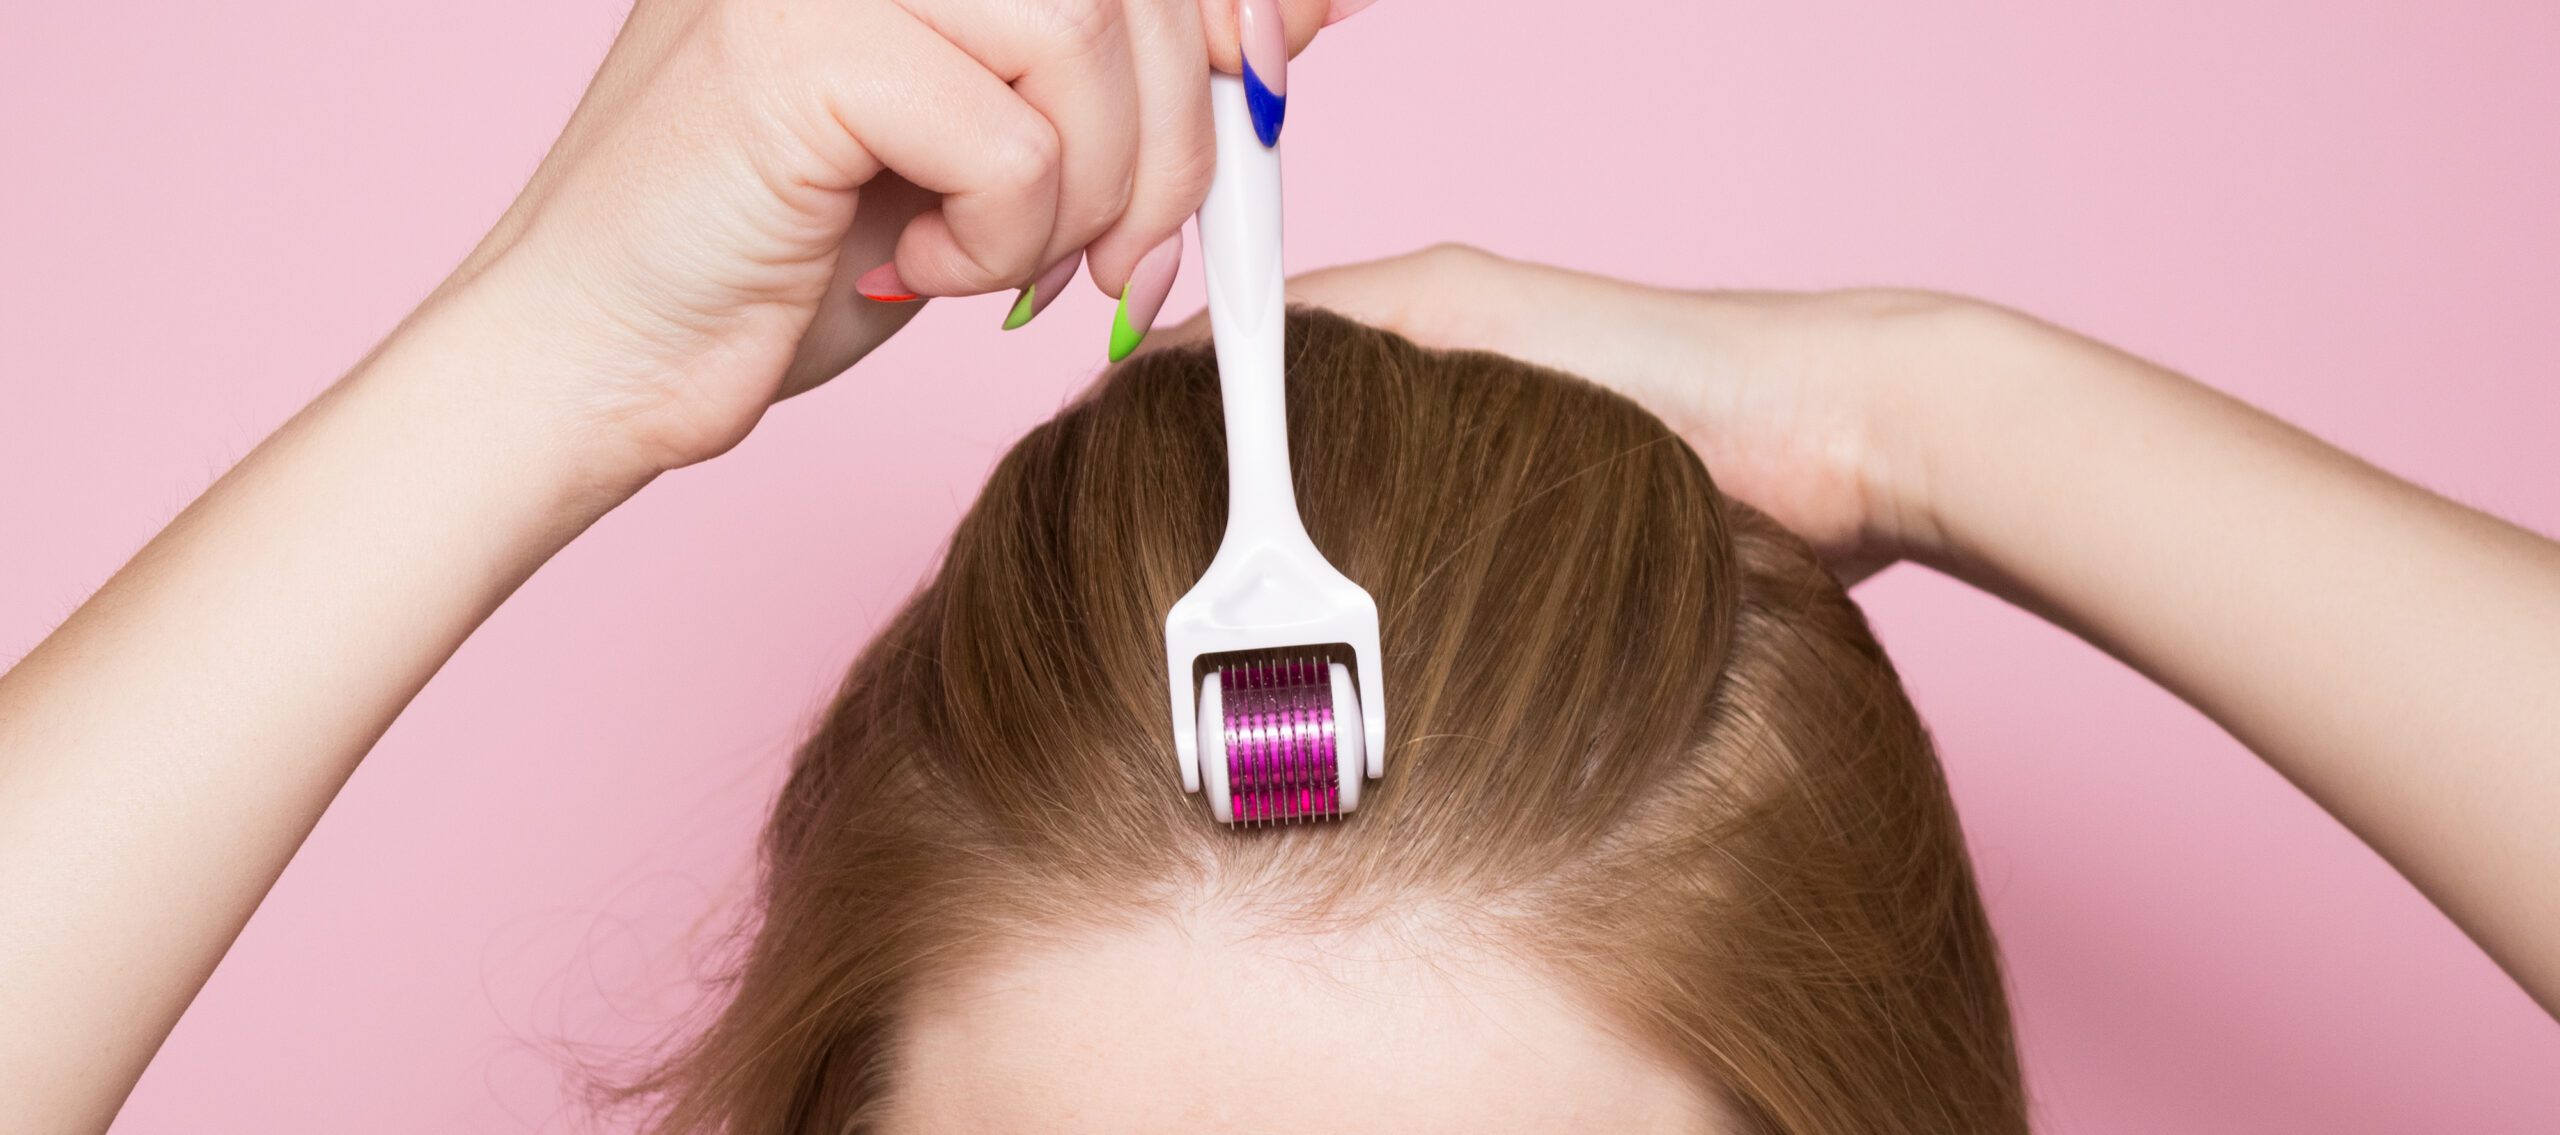 Microneedling as a hair loss treatment